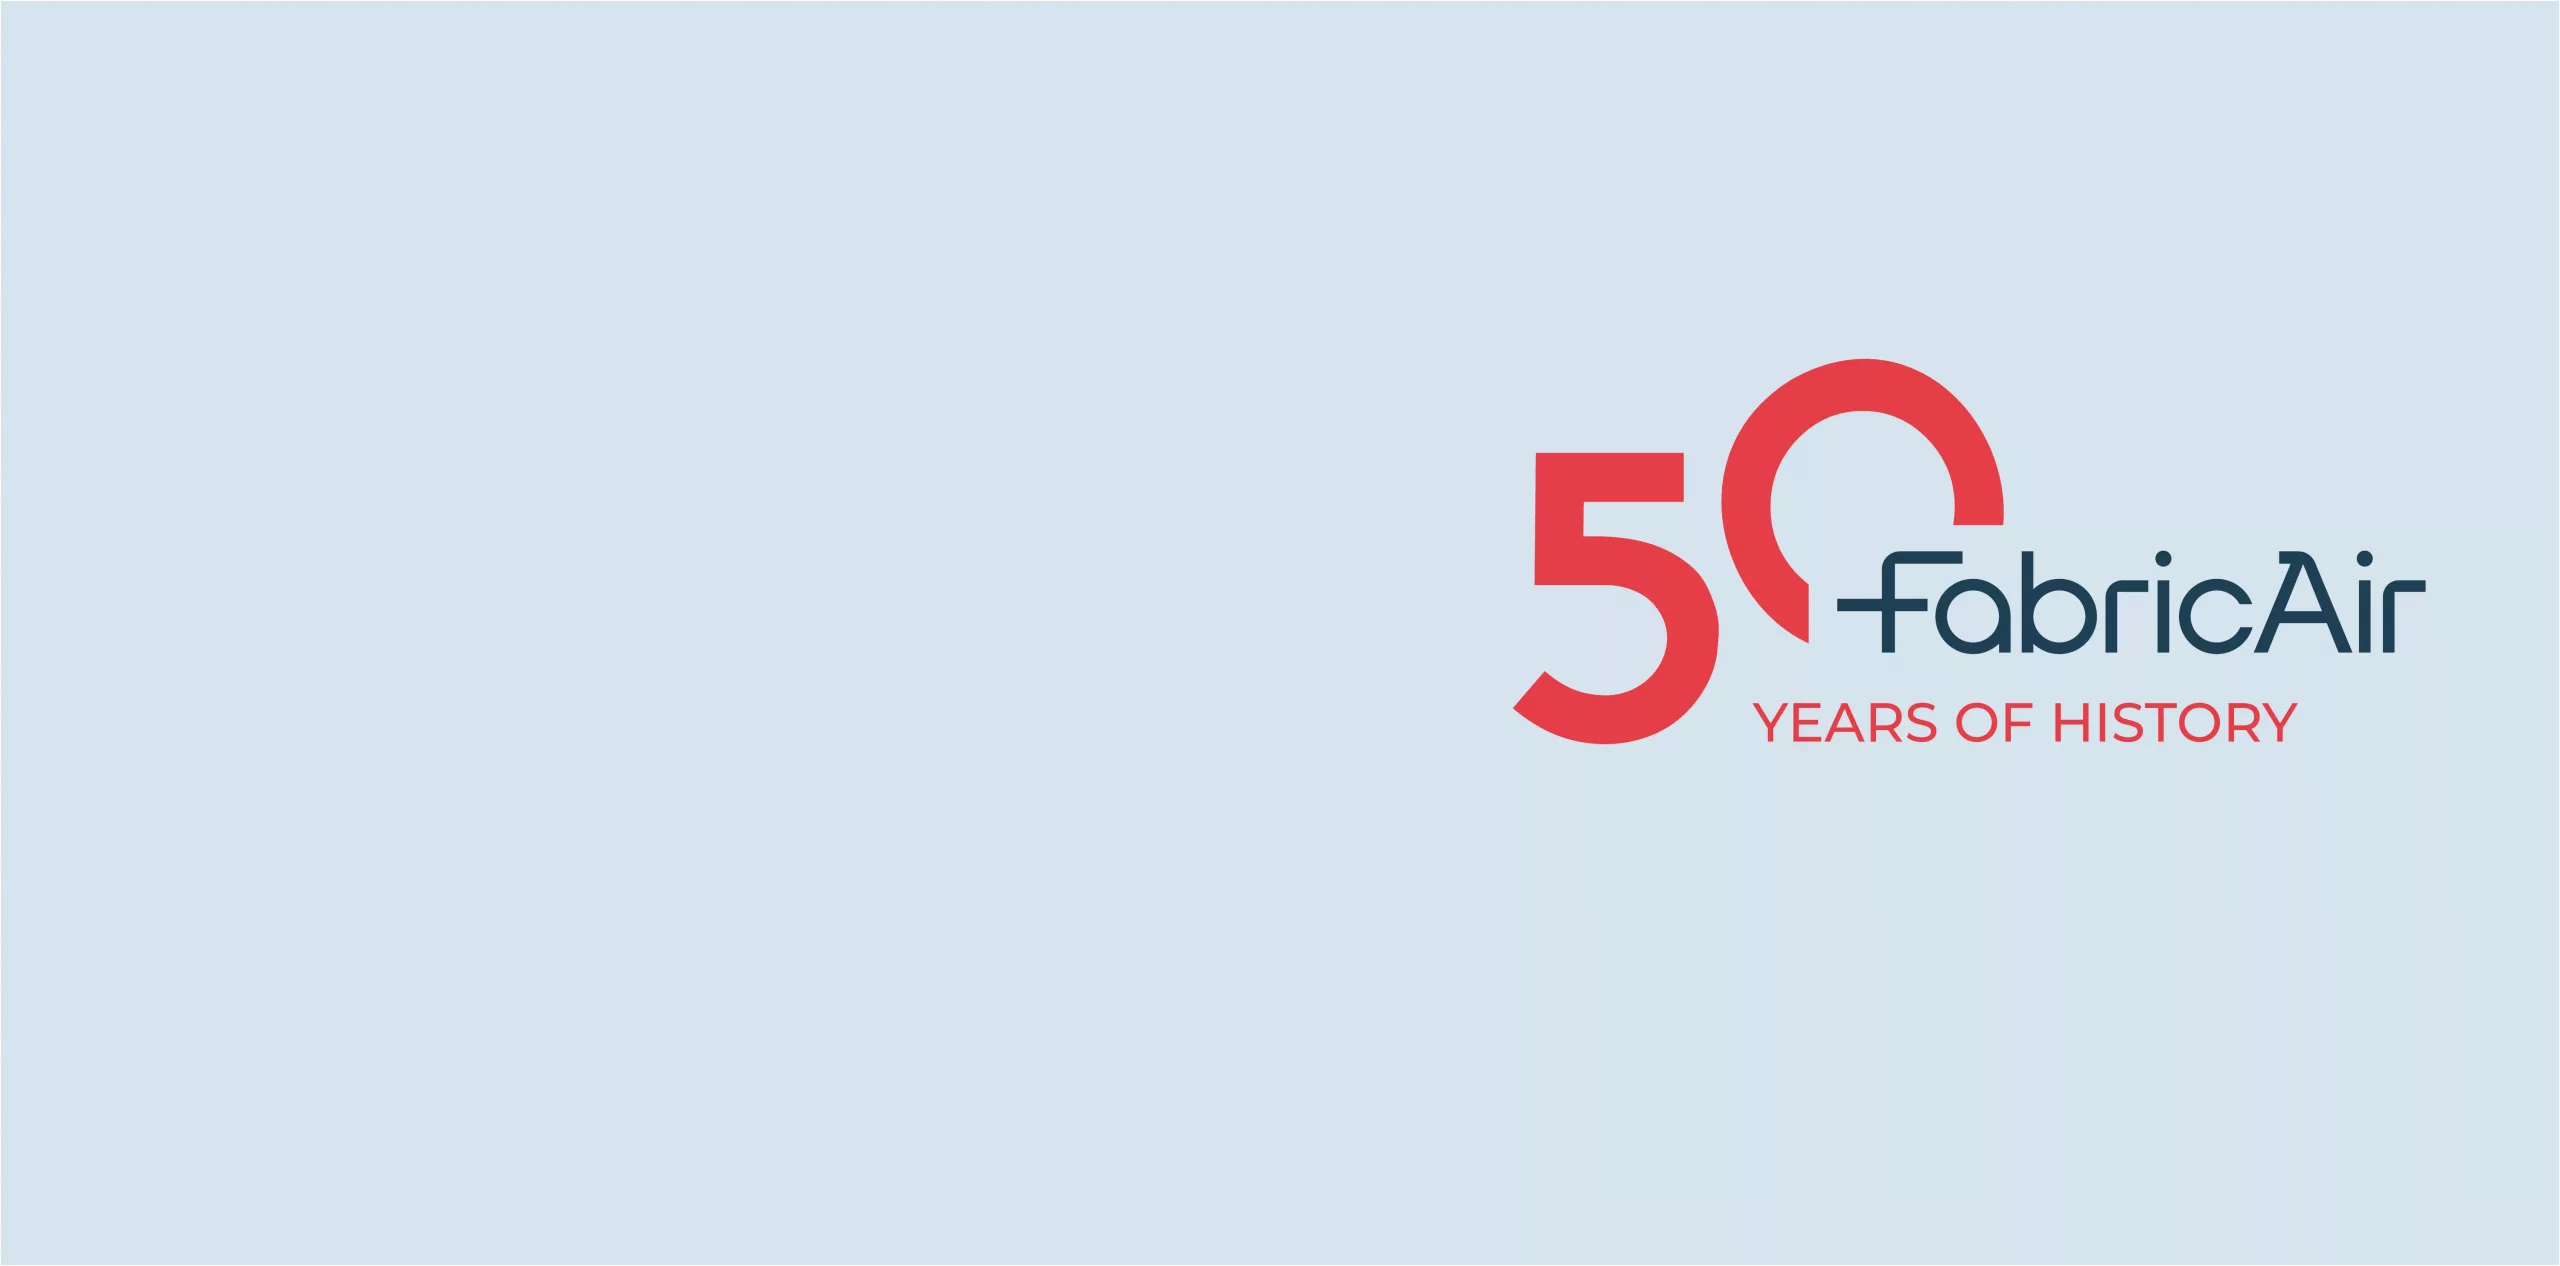 FabricAir 50 years